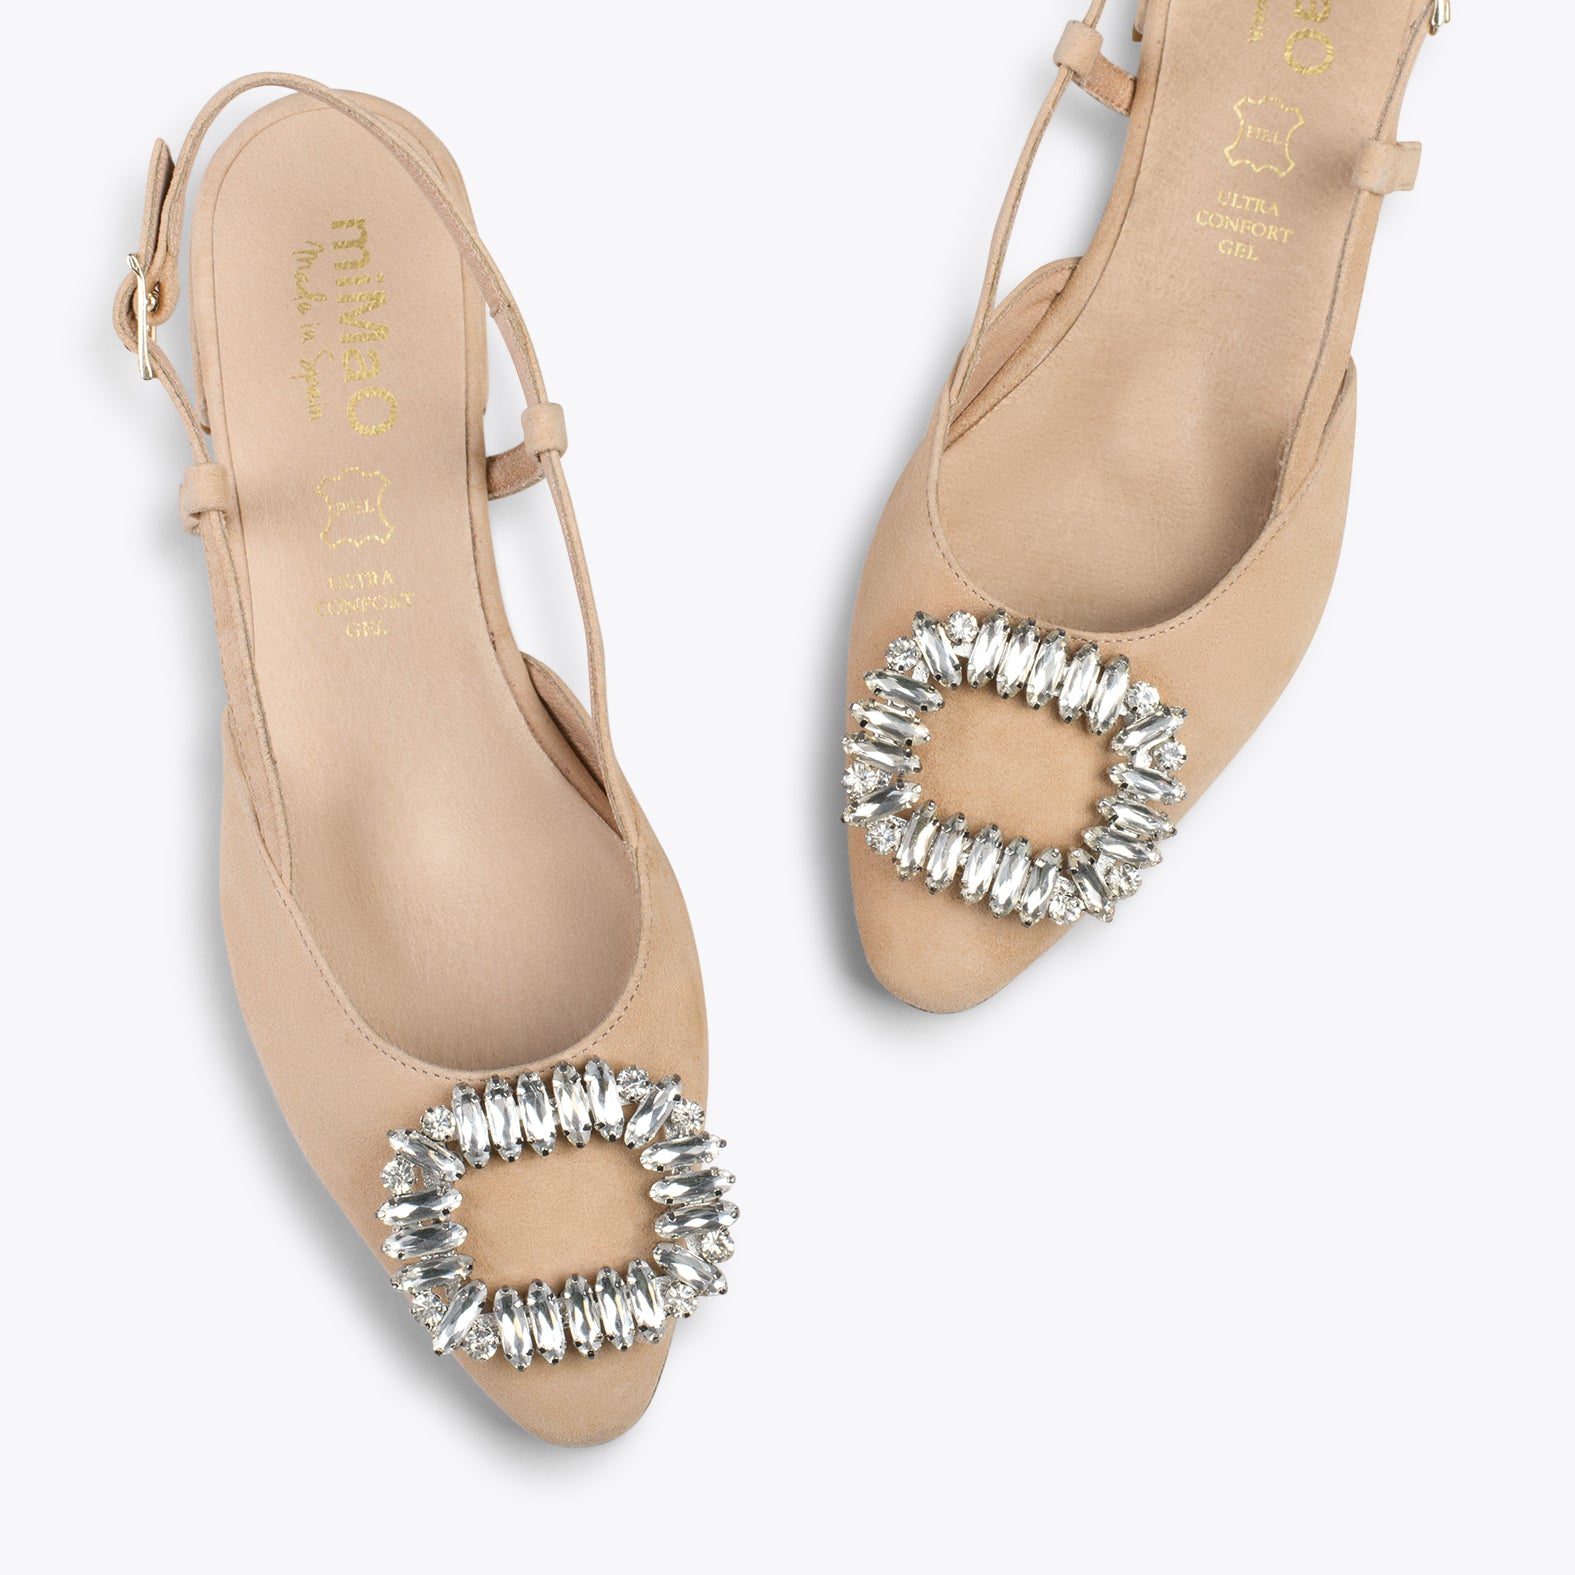 BRUNCH CRISTAL - Zapatos planos destalonados con adorno de cristal ARENA